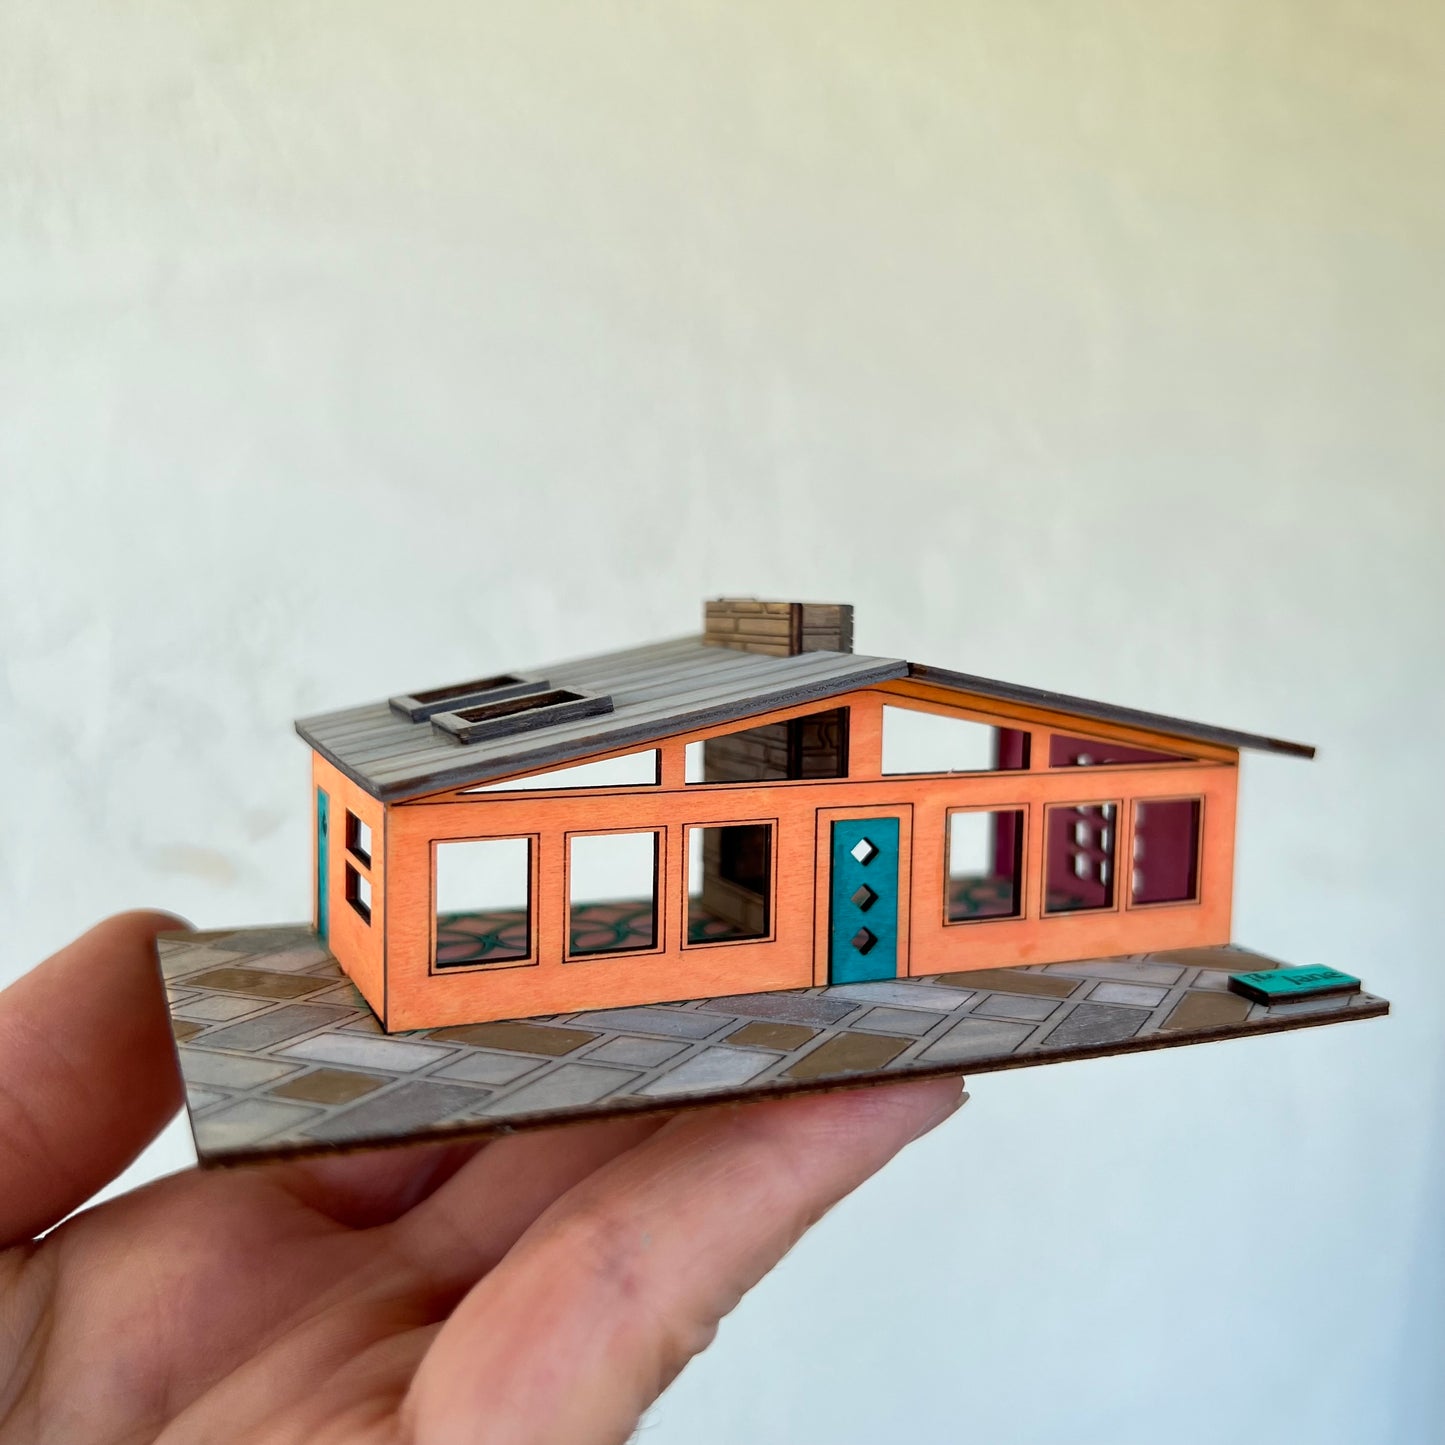 The Jane, Mid Century Modern Miniature Dollhouse 1:144